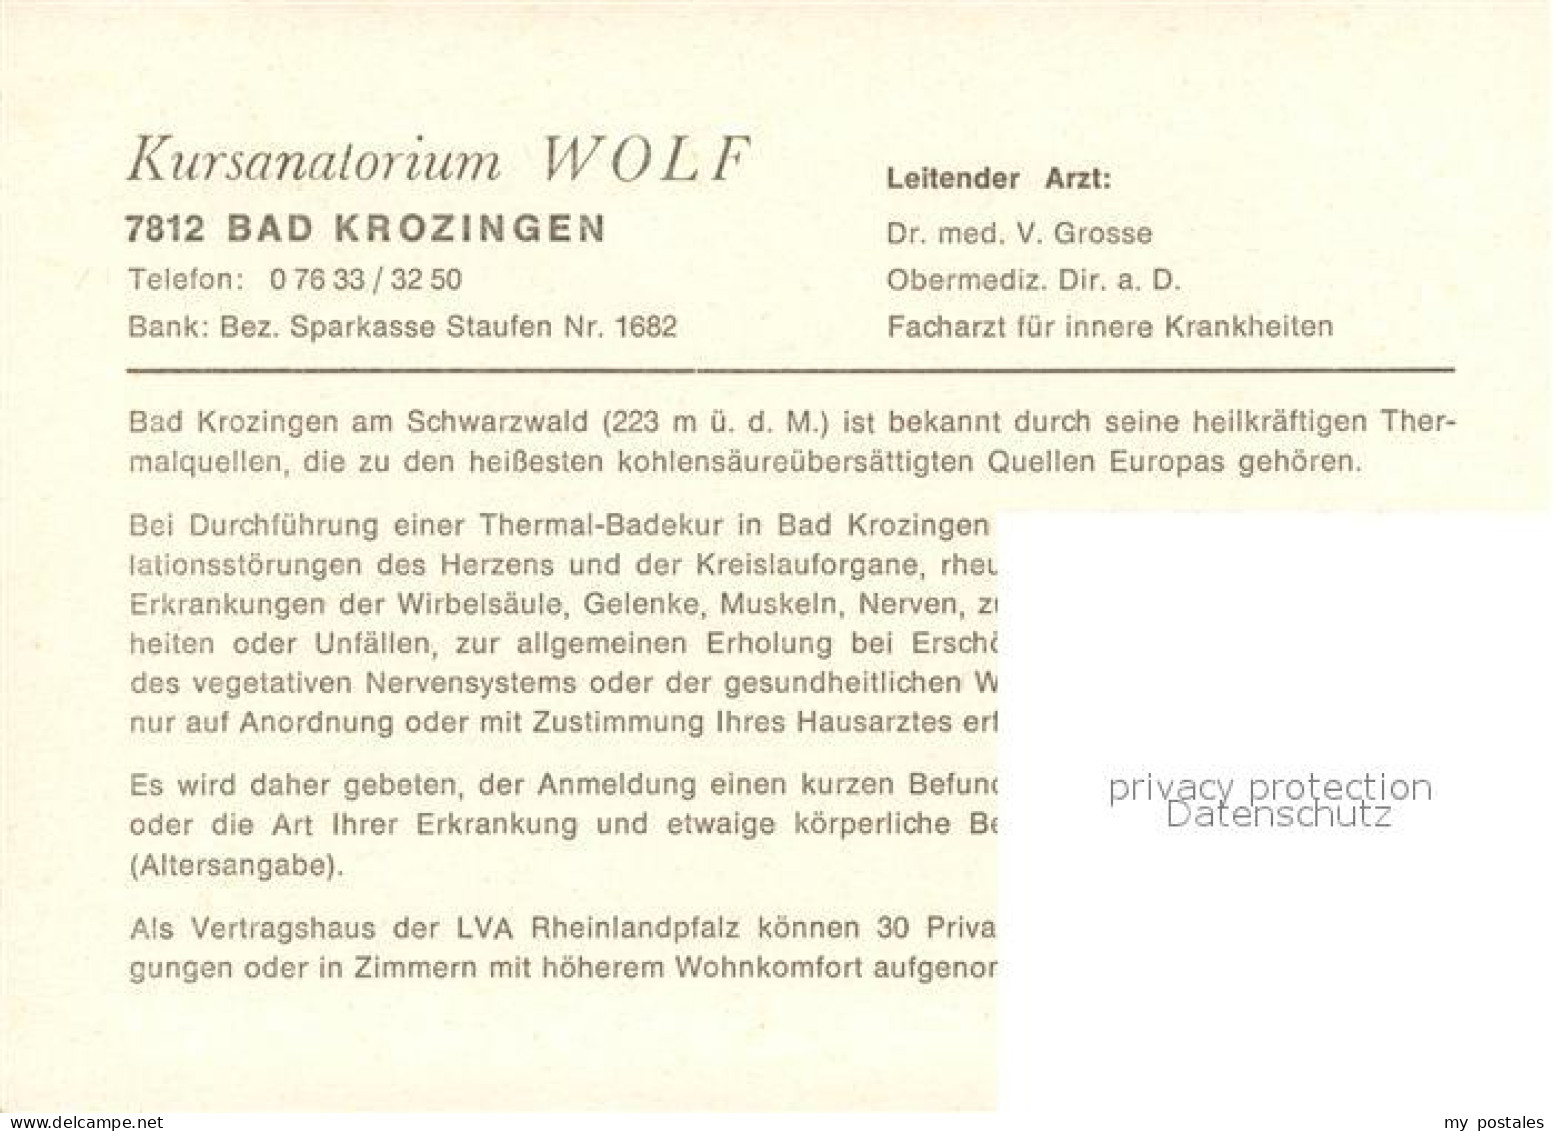 73633488 Bad Krozingen Kursanatorium Wolf Bad Krozingen - Bad Krozingen